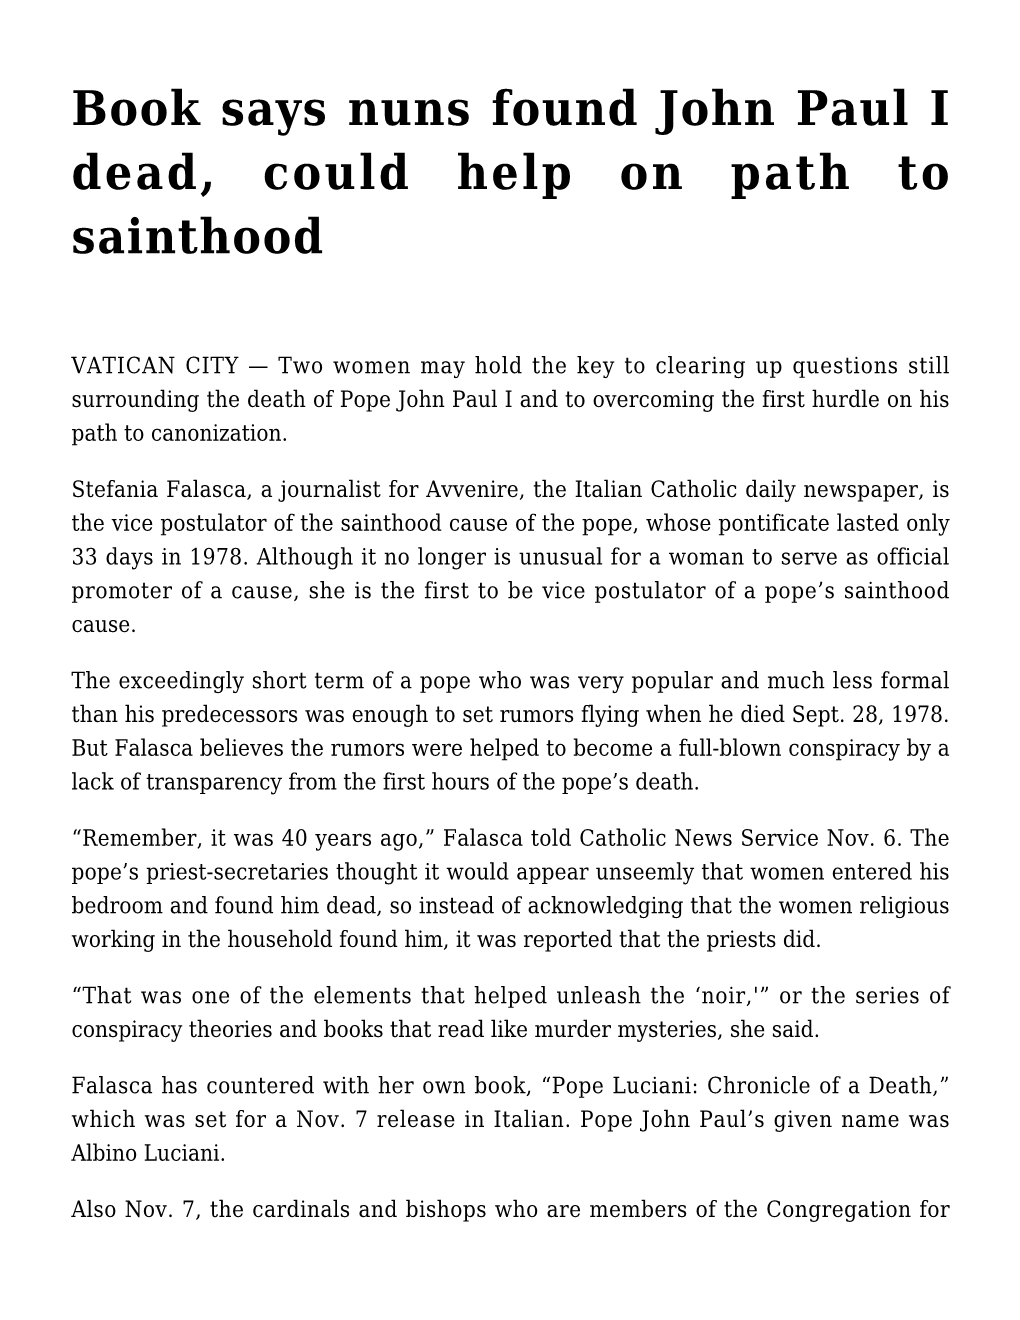 Book Says Nuns Found John Paul I Dead, Could Help on Path to Sainthood